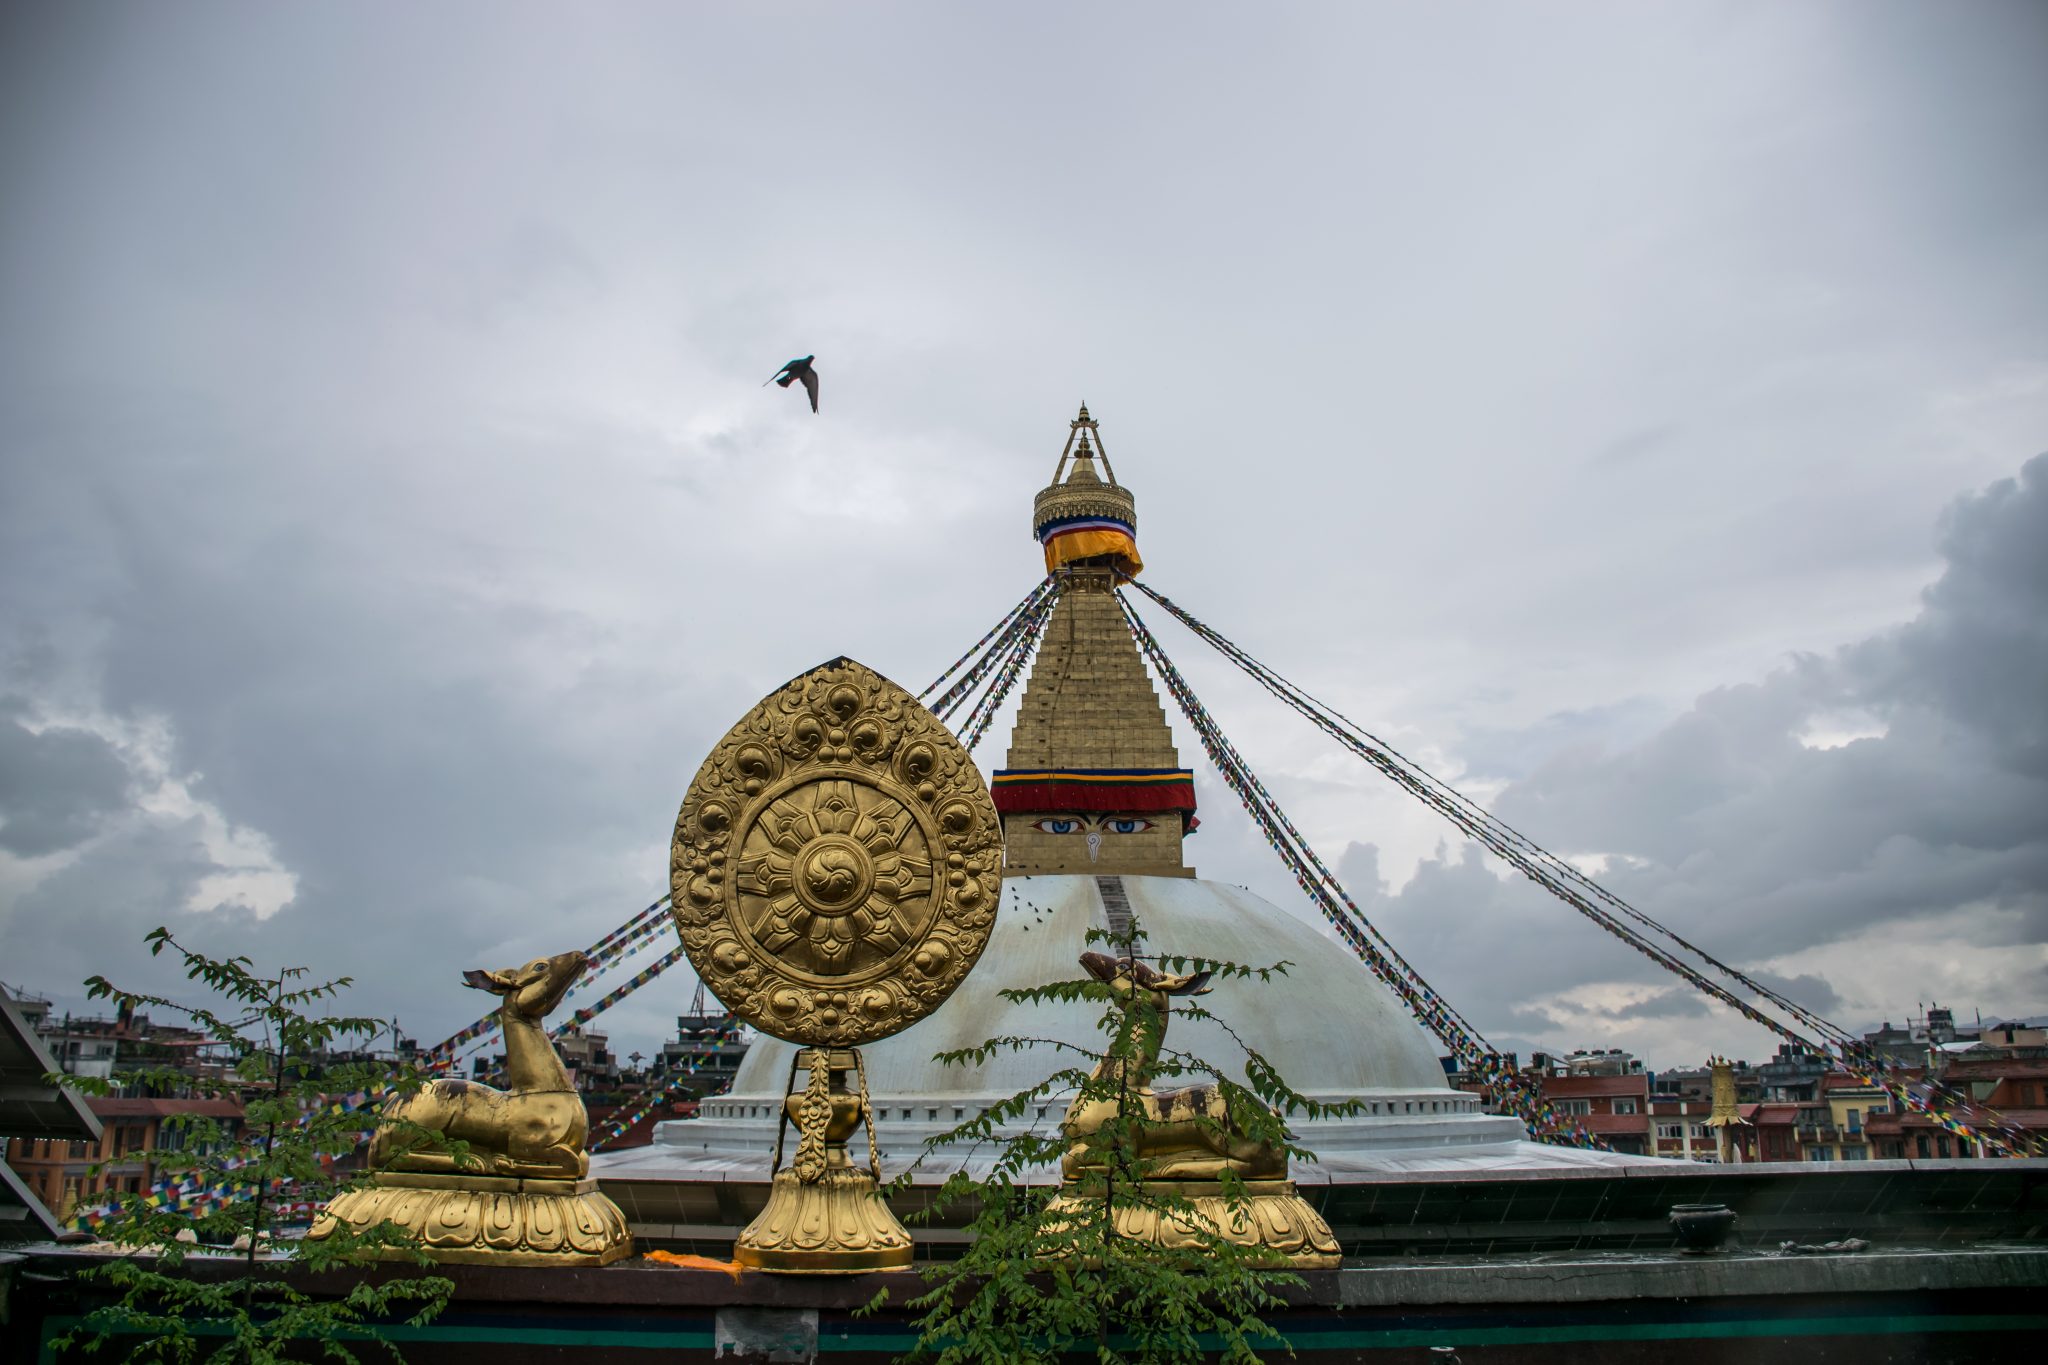 Boudhanath Stupa is one of the UNESCO World Heritage Sites in Kathmandu Nepal